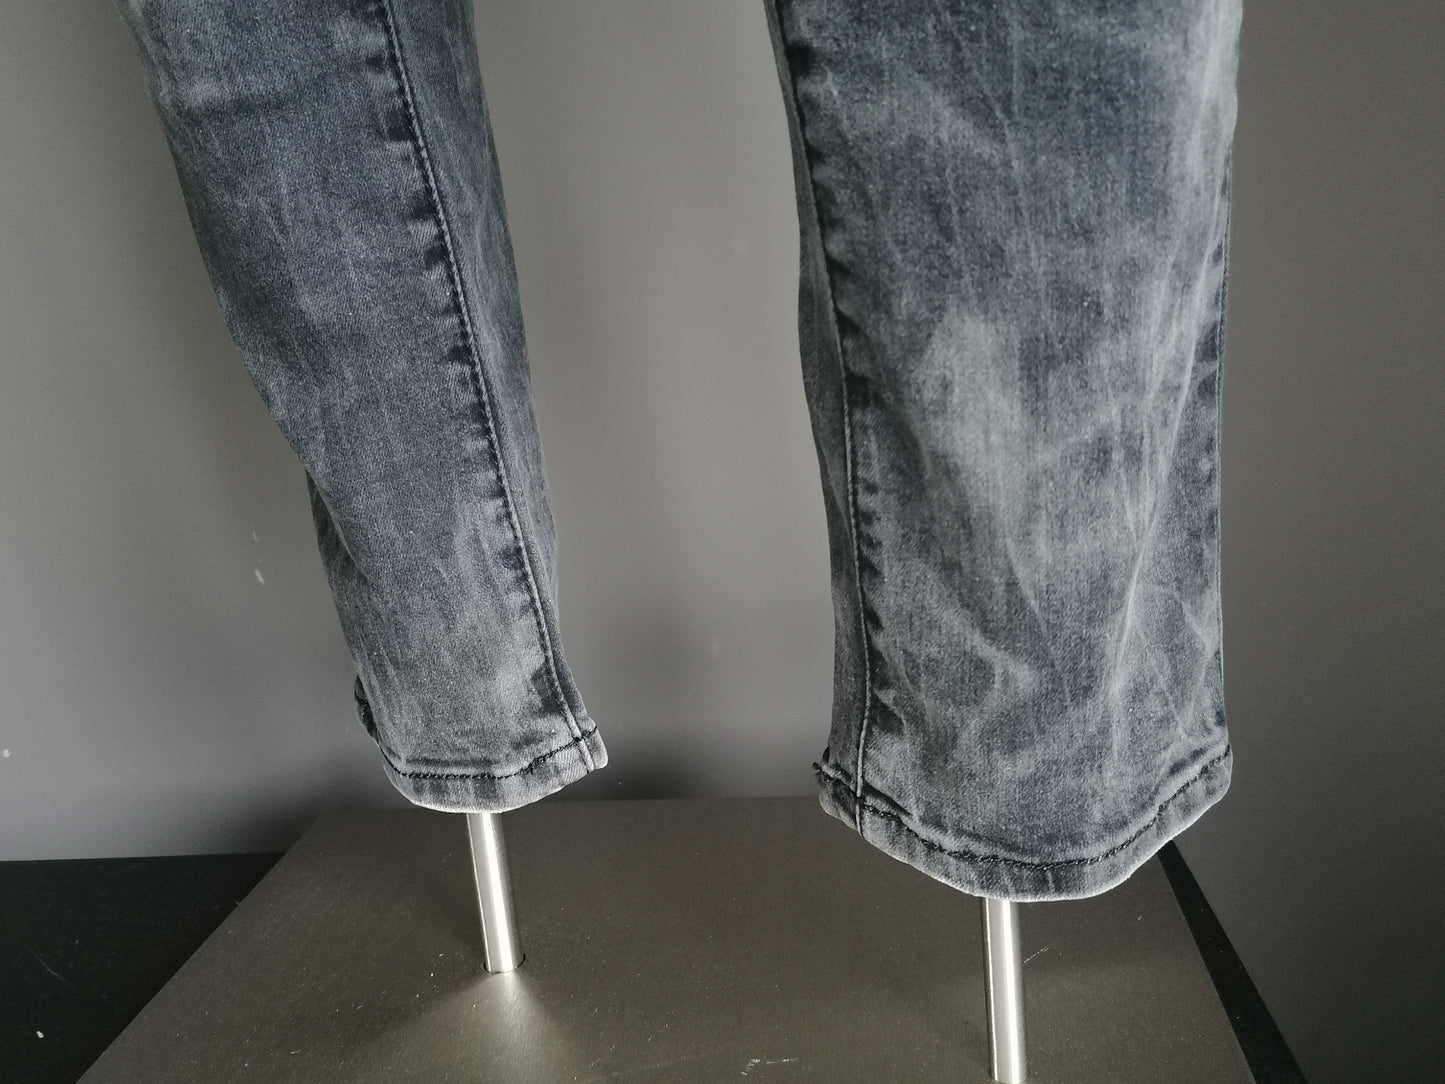 Susting Jeans. Negro de color. Tamaño W34 - L32. estirar